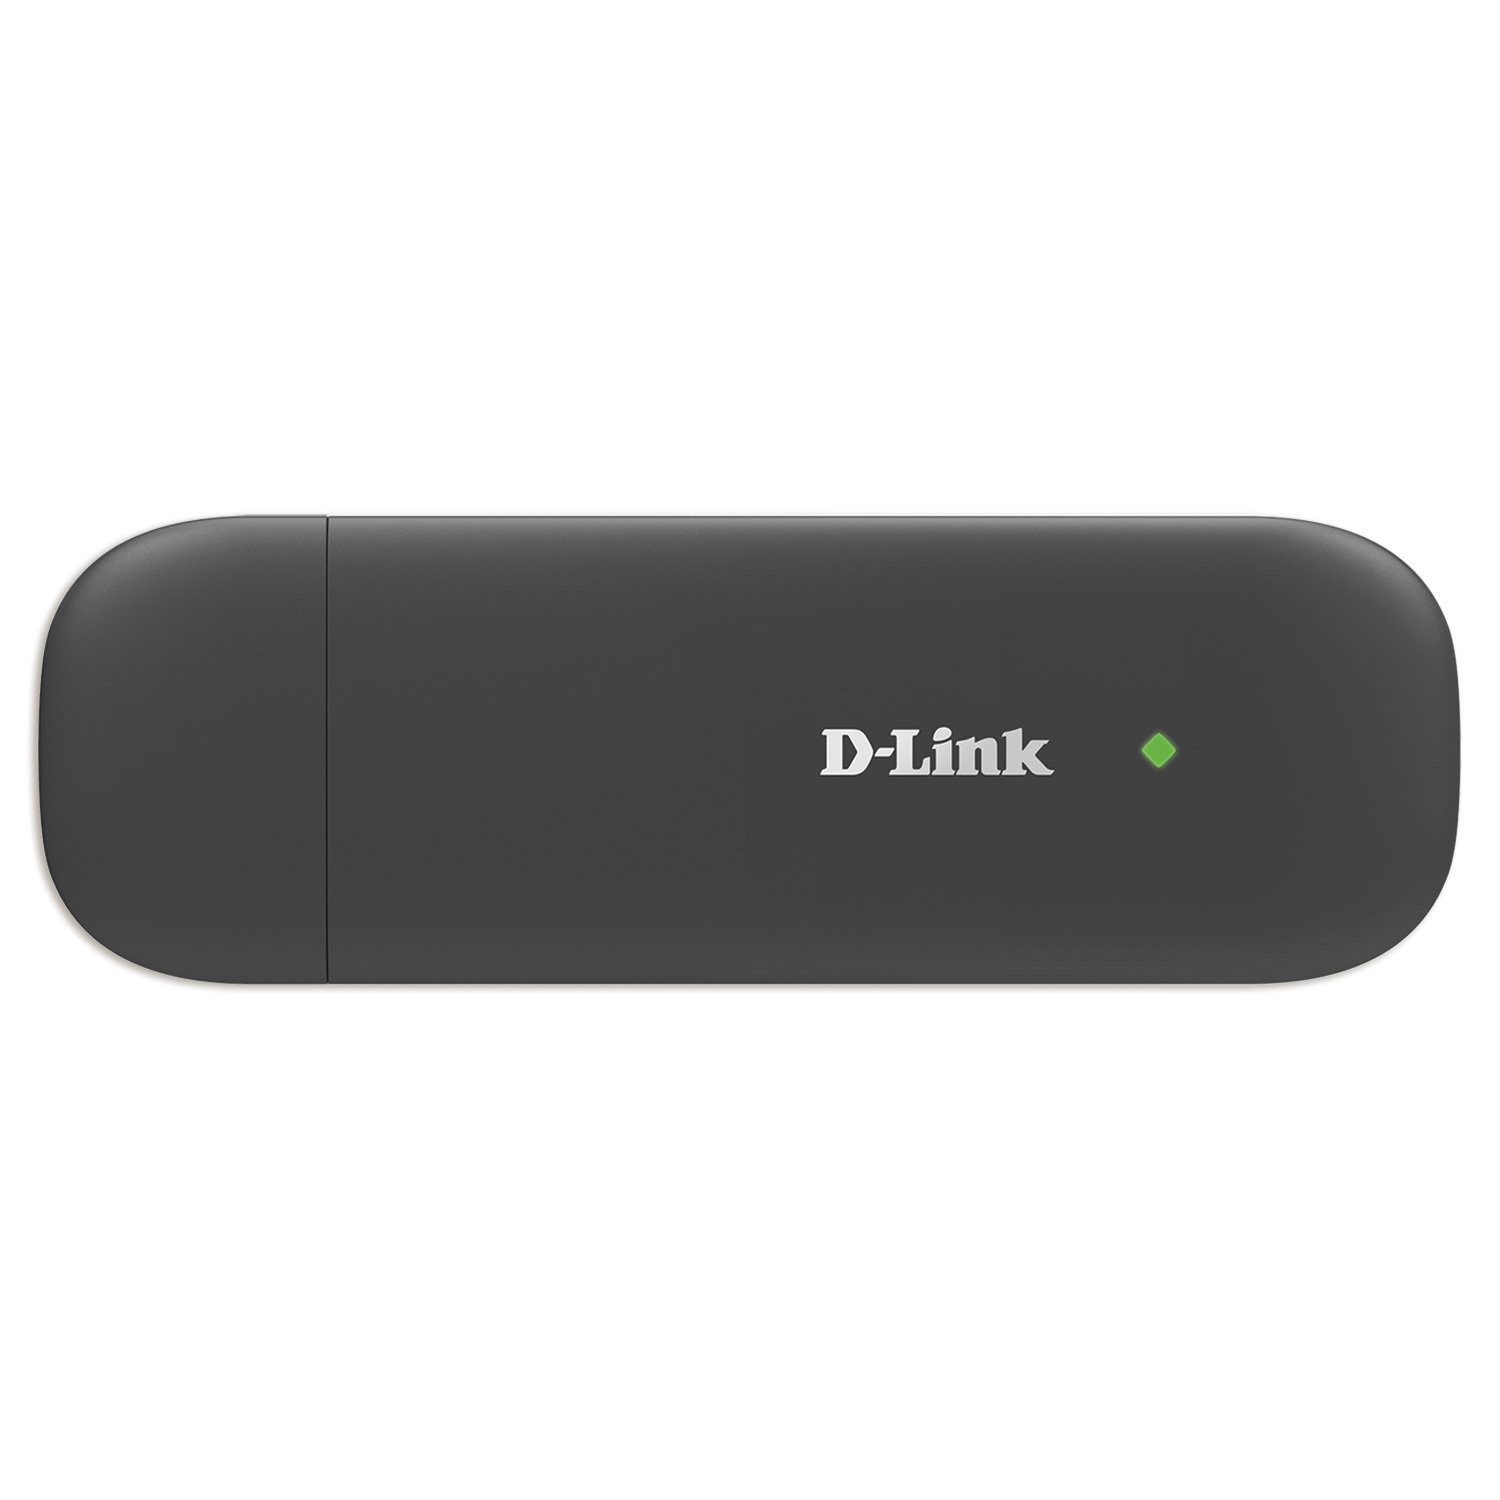 D-Link DWM-222 4G LTE USB Adapter (USB-Anschluss, 4G/LTE/3G, HSPA+, 150 Mbps Download und 50 Mbps Upload) schwarz/anthrazit